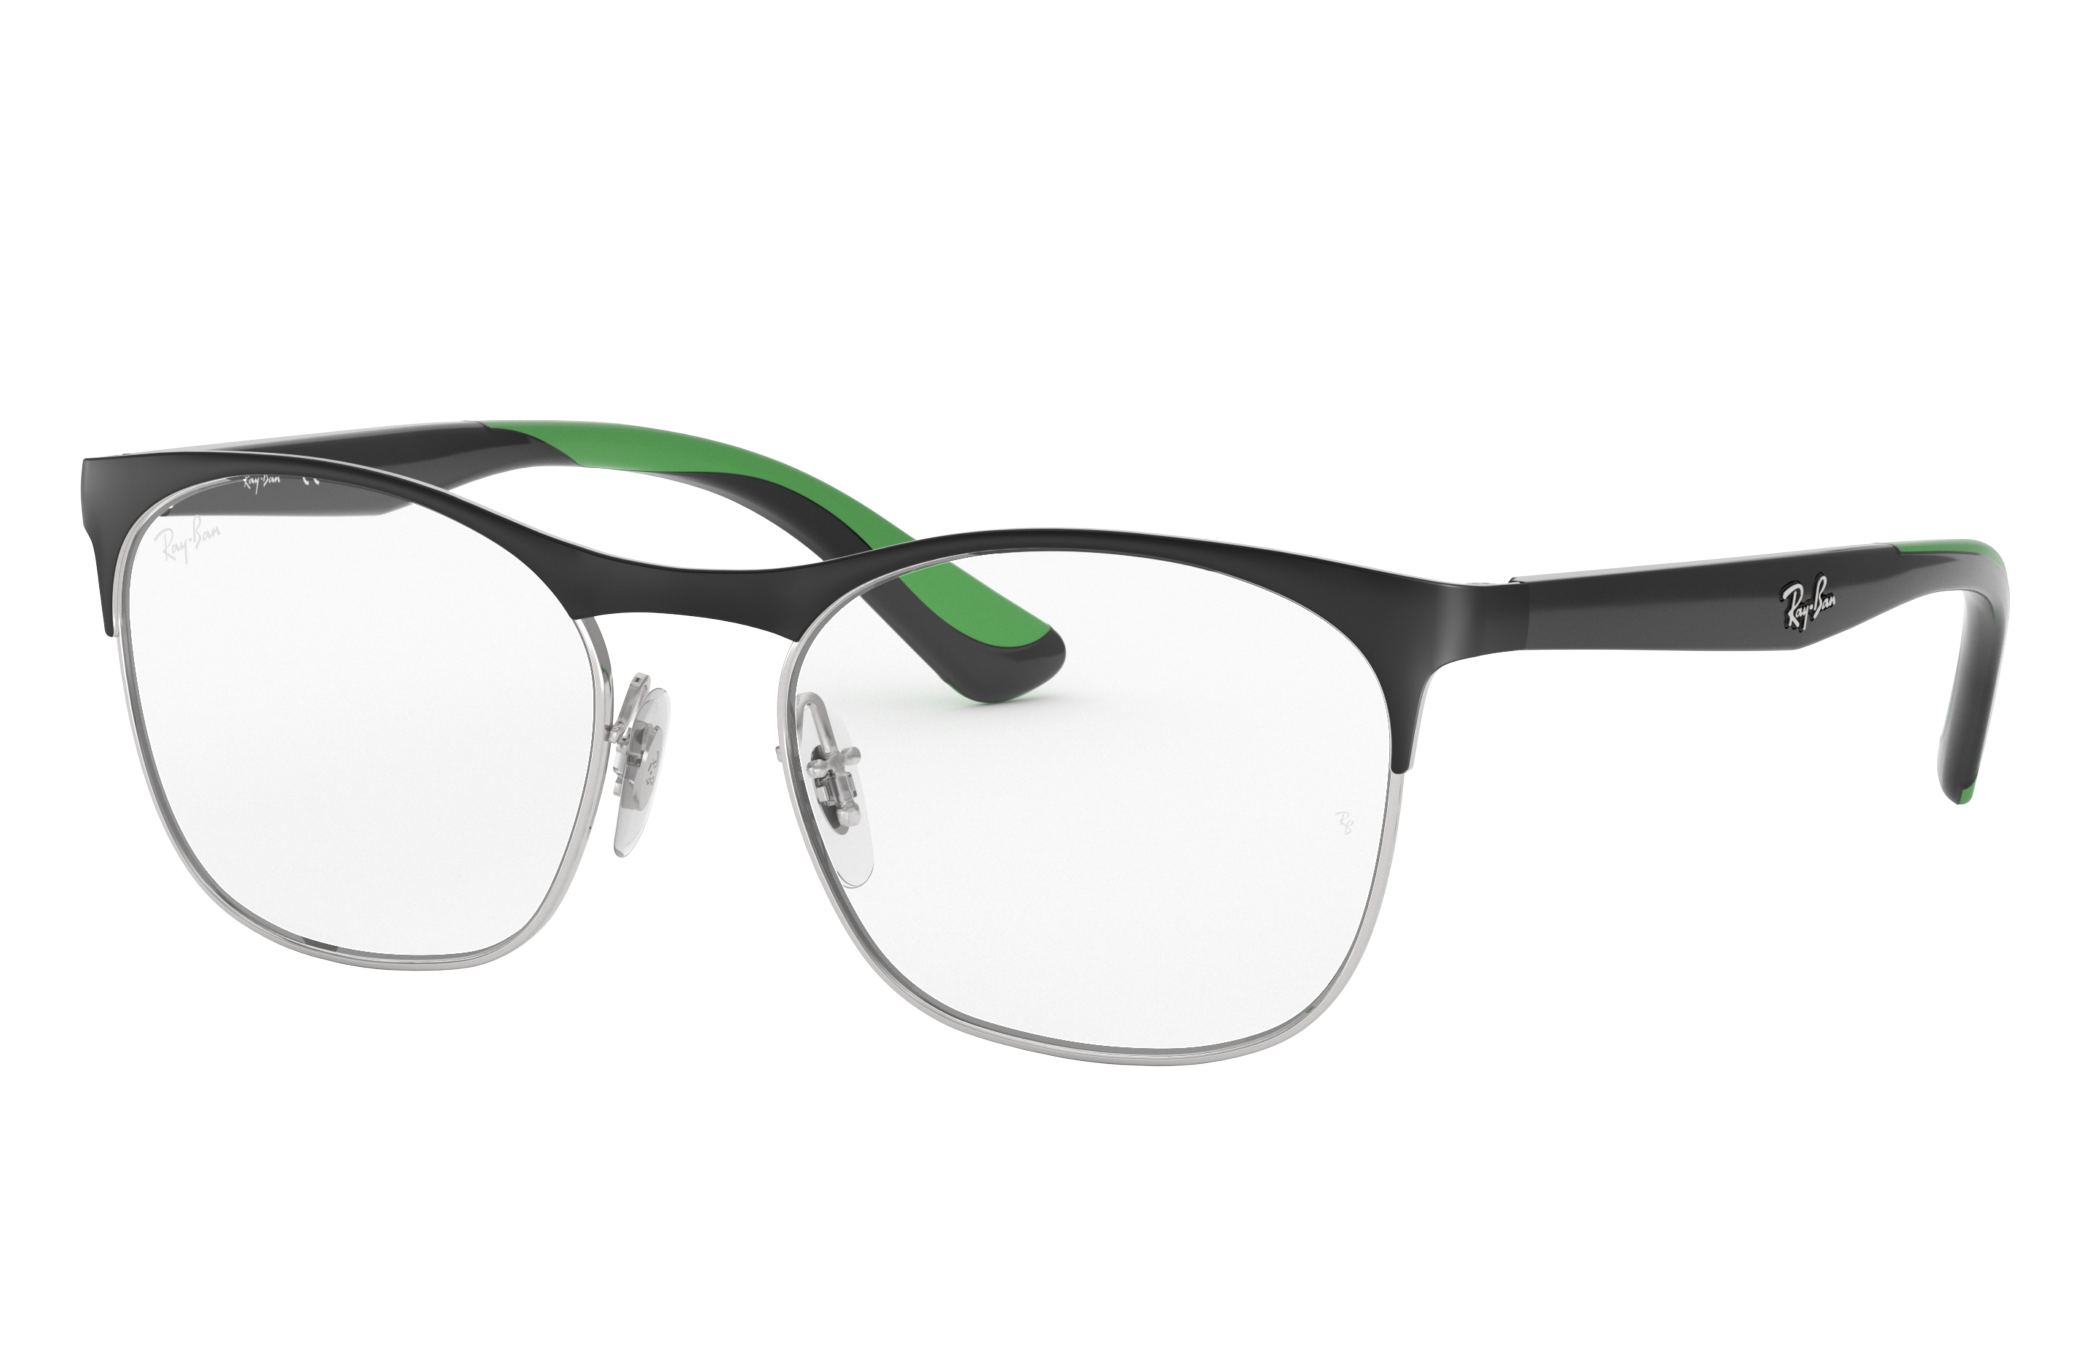 Rb1054 Optics Kids Eyeglasses with Matte Black On Silver Frame | Ray-Ban®